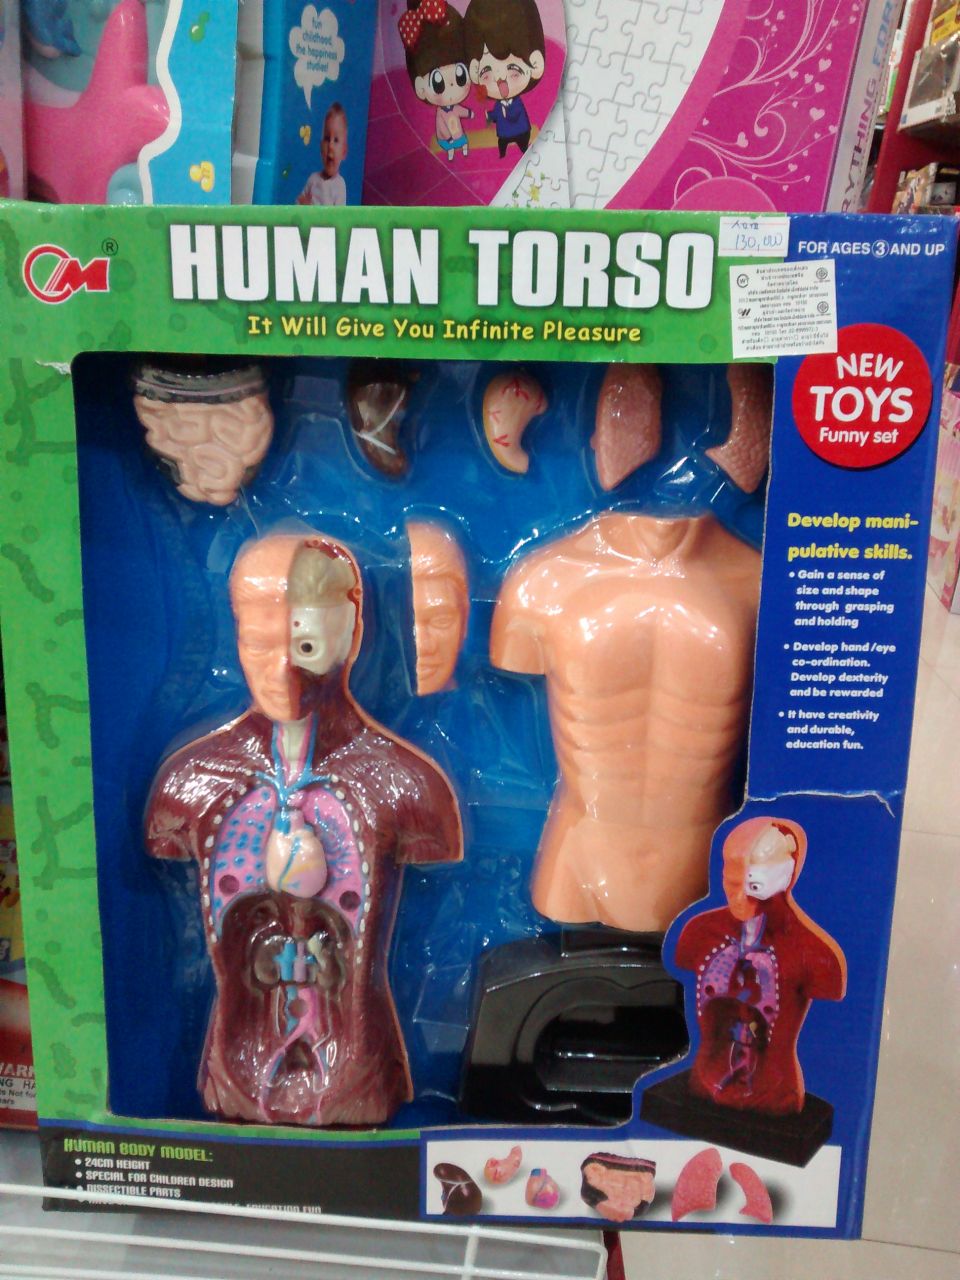 Human Torso - It Will Give You Infinite Pleasure